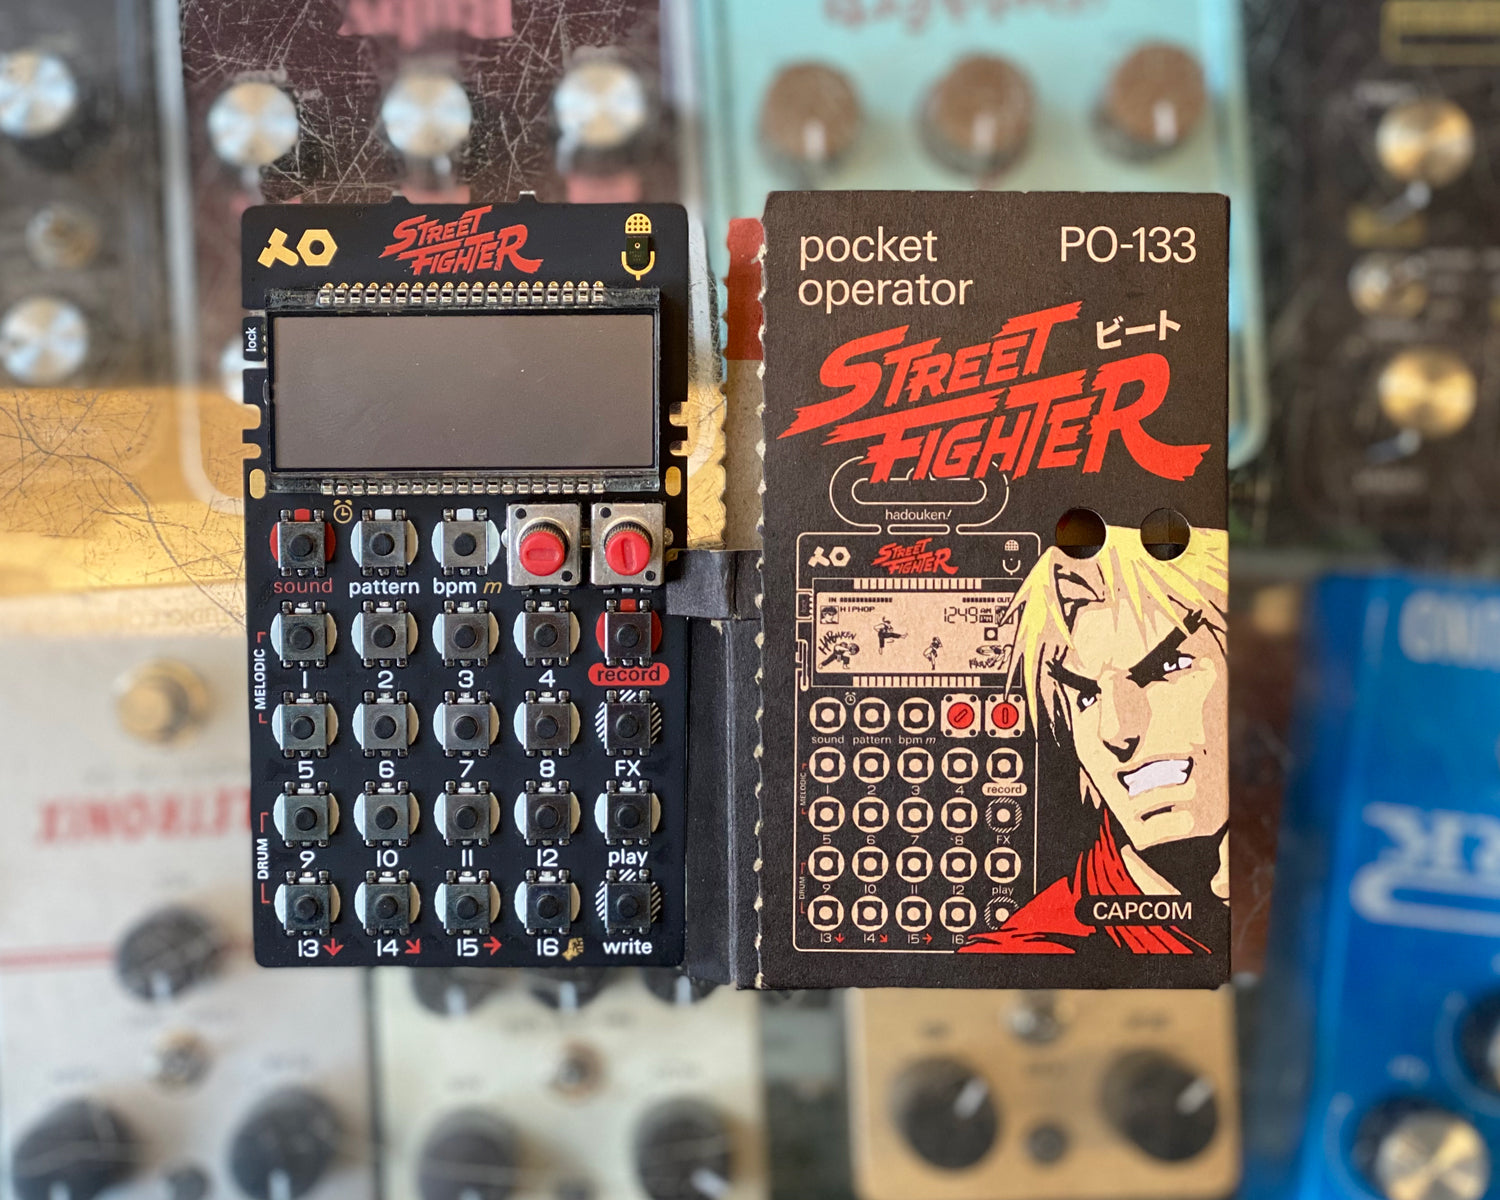 Pocket operator street fighter コラボモデル - 鍵盤楽器